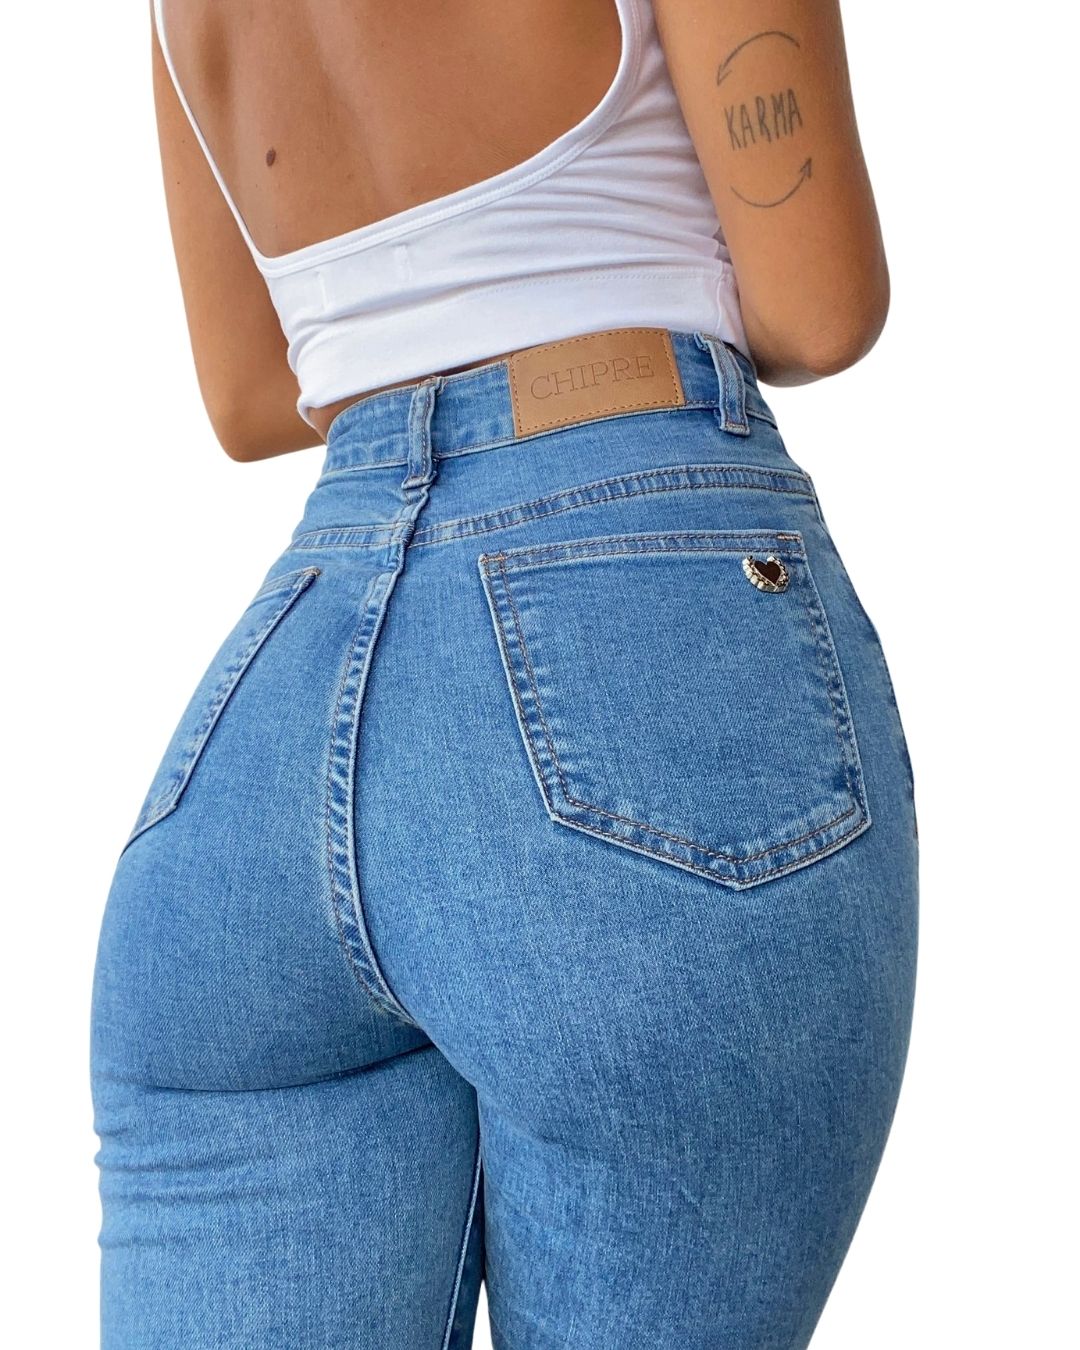 Agalma High-Rise Skinny Jean #FlatteringFit - Chipre Basic Denim